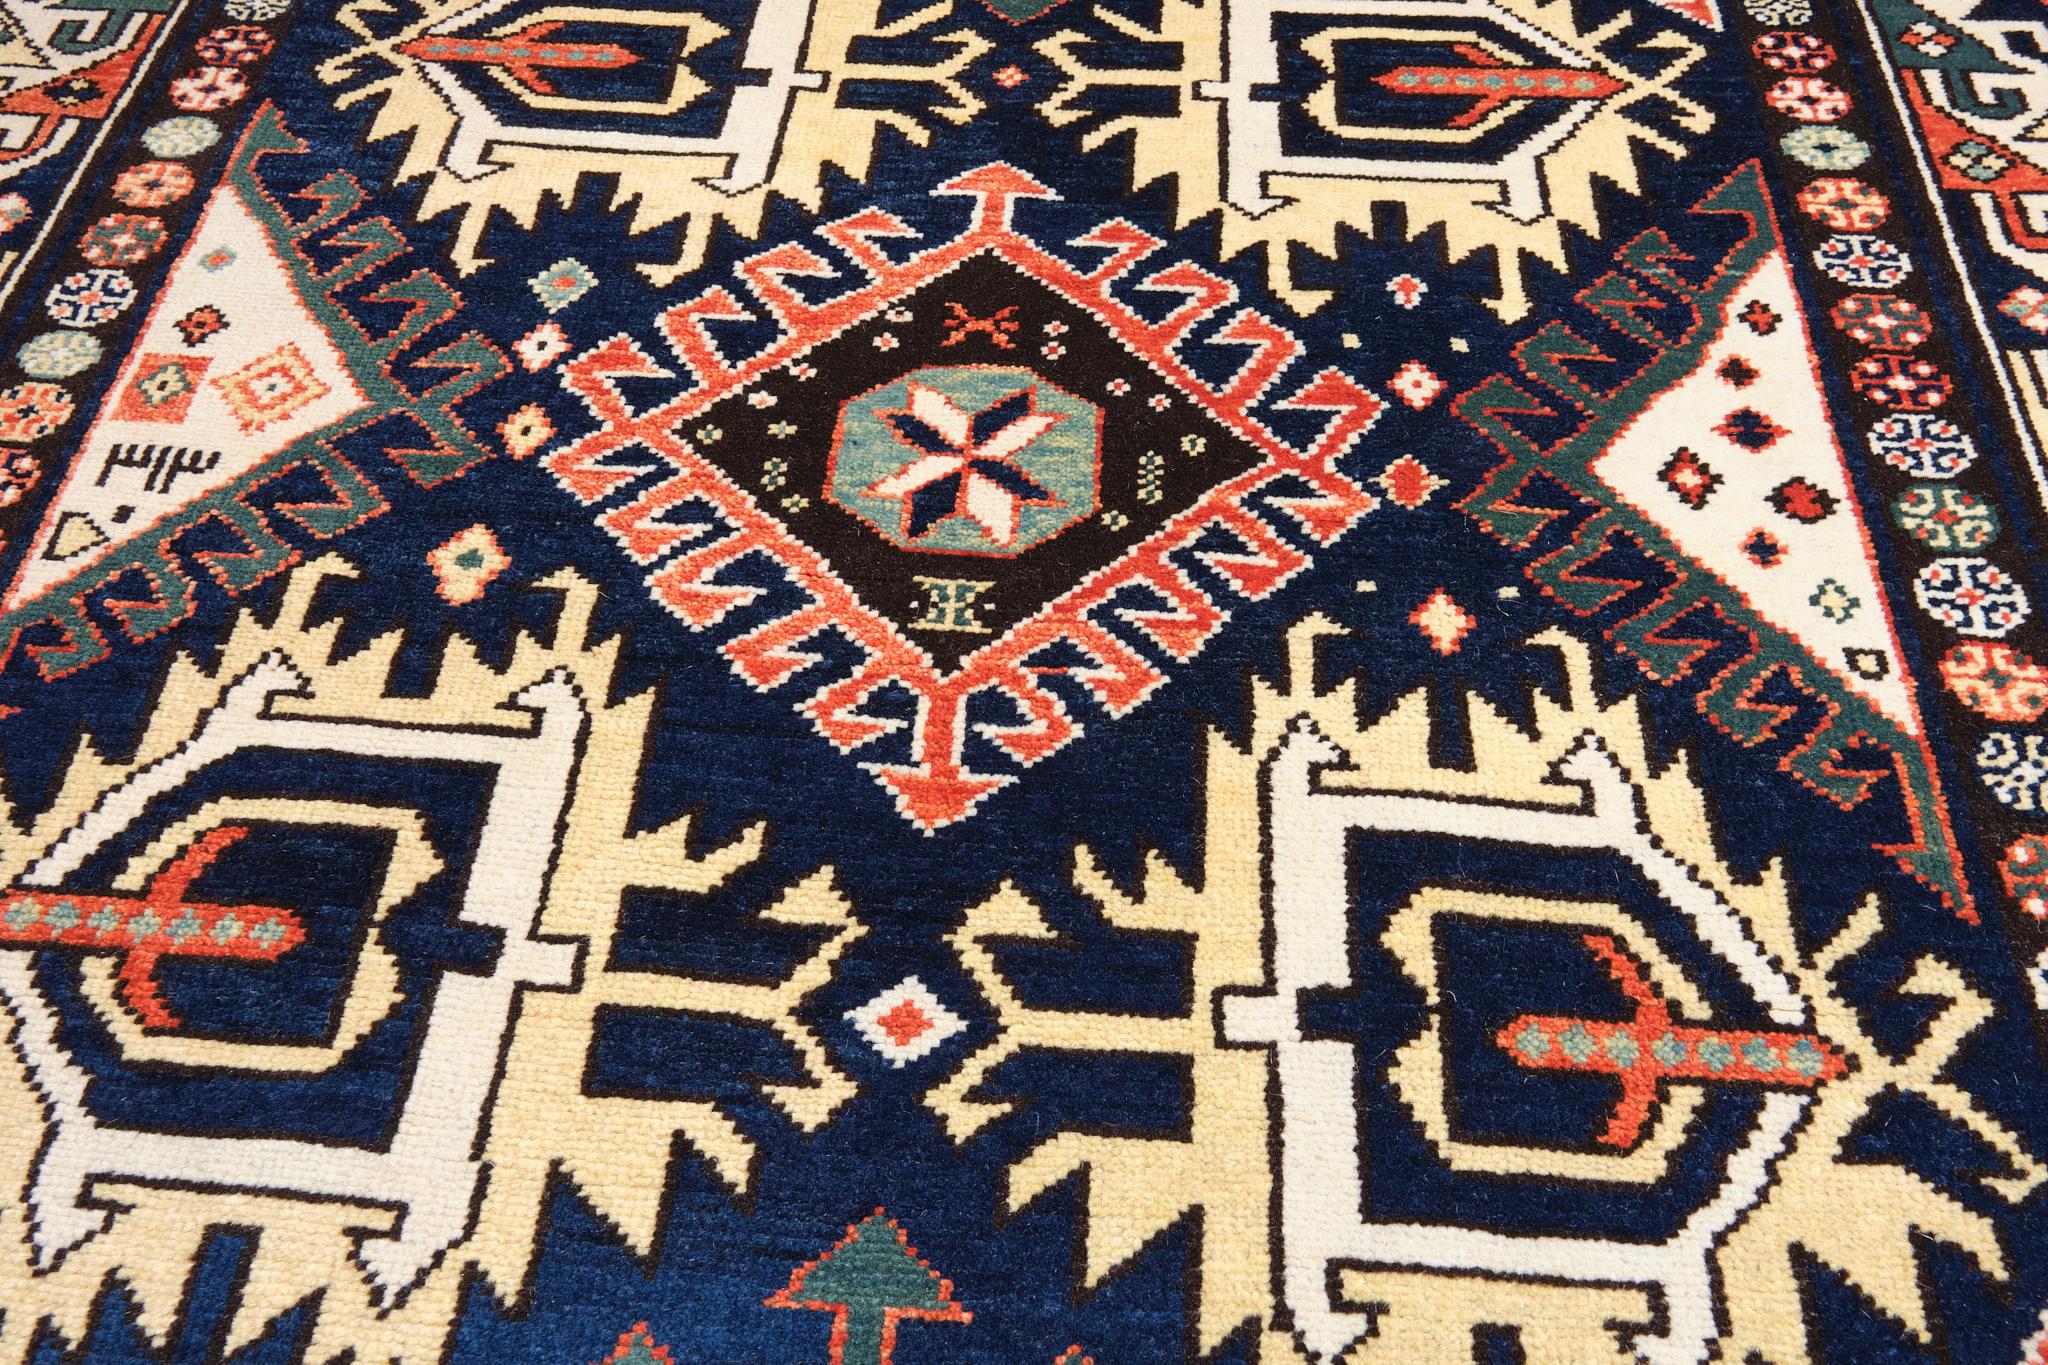 Turkish Ararat Rugs Derbend Kazak Rug, 19th C. Caucasian Revival Carpet Natural Dyed For Sale